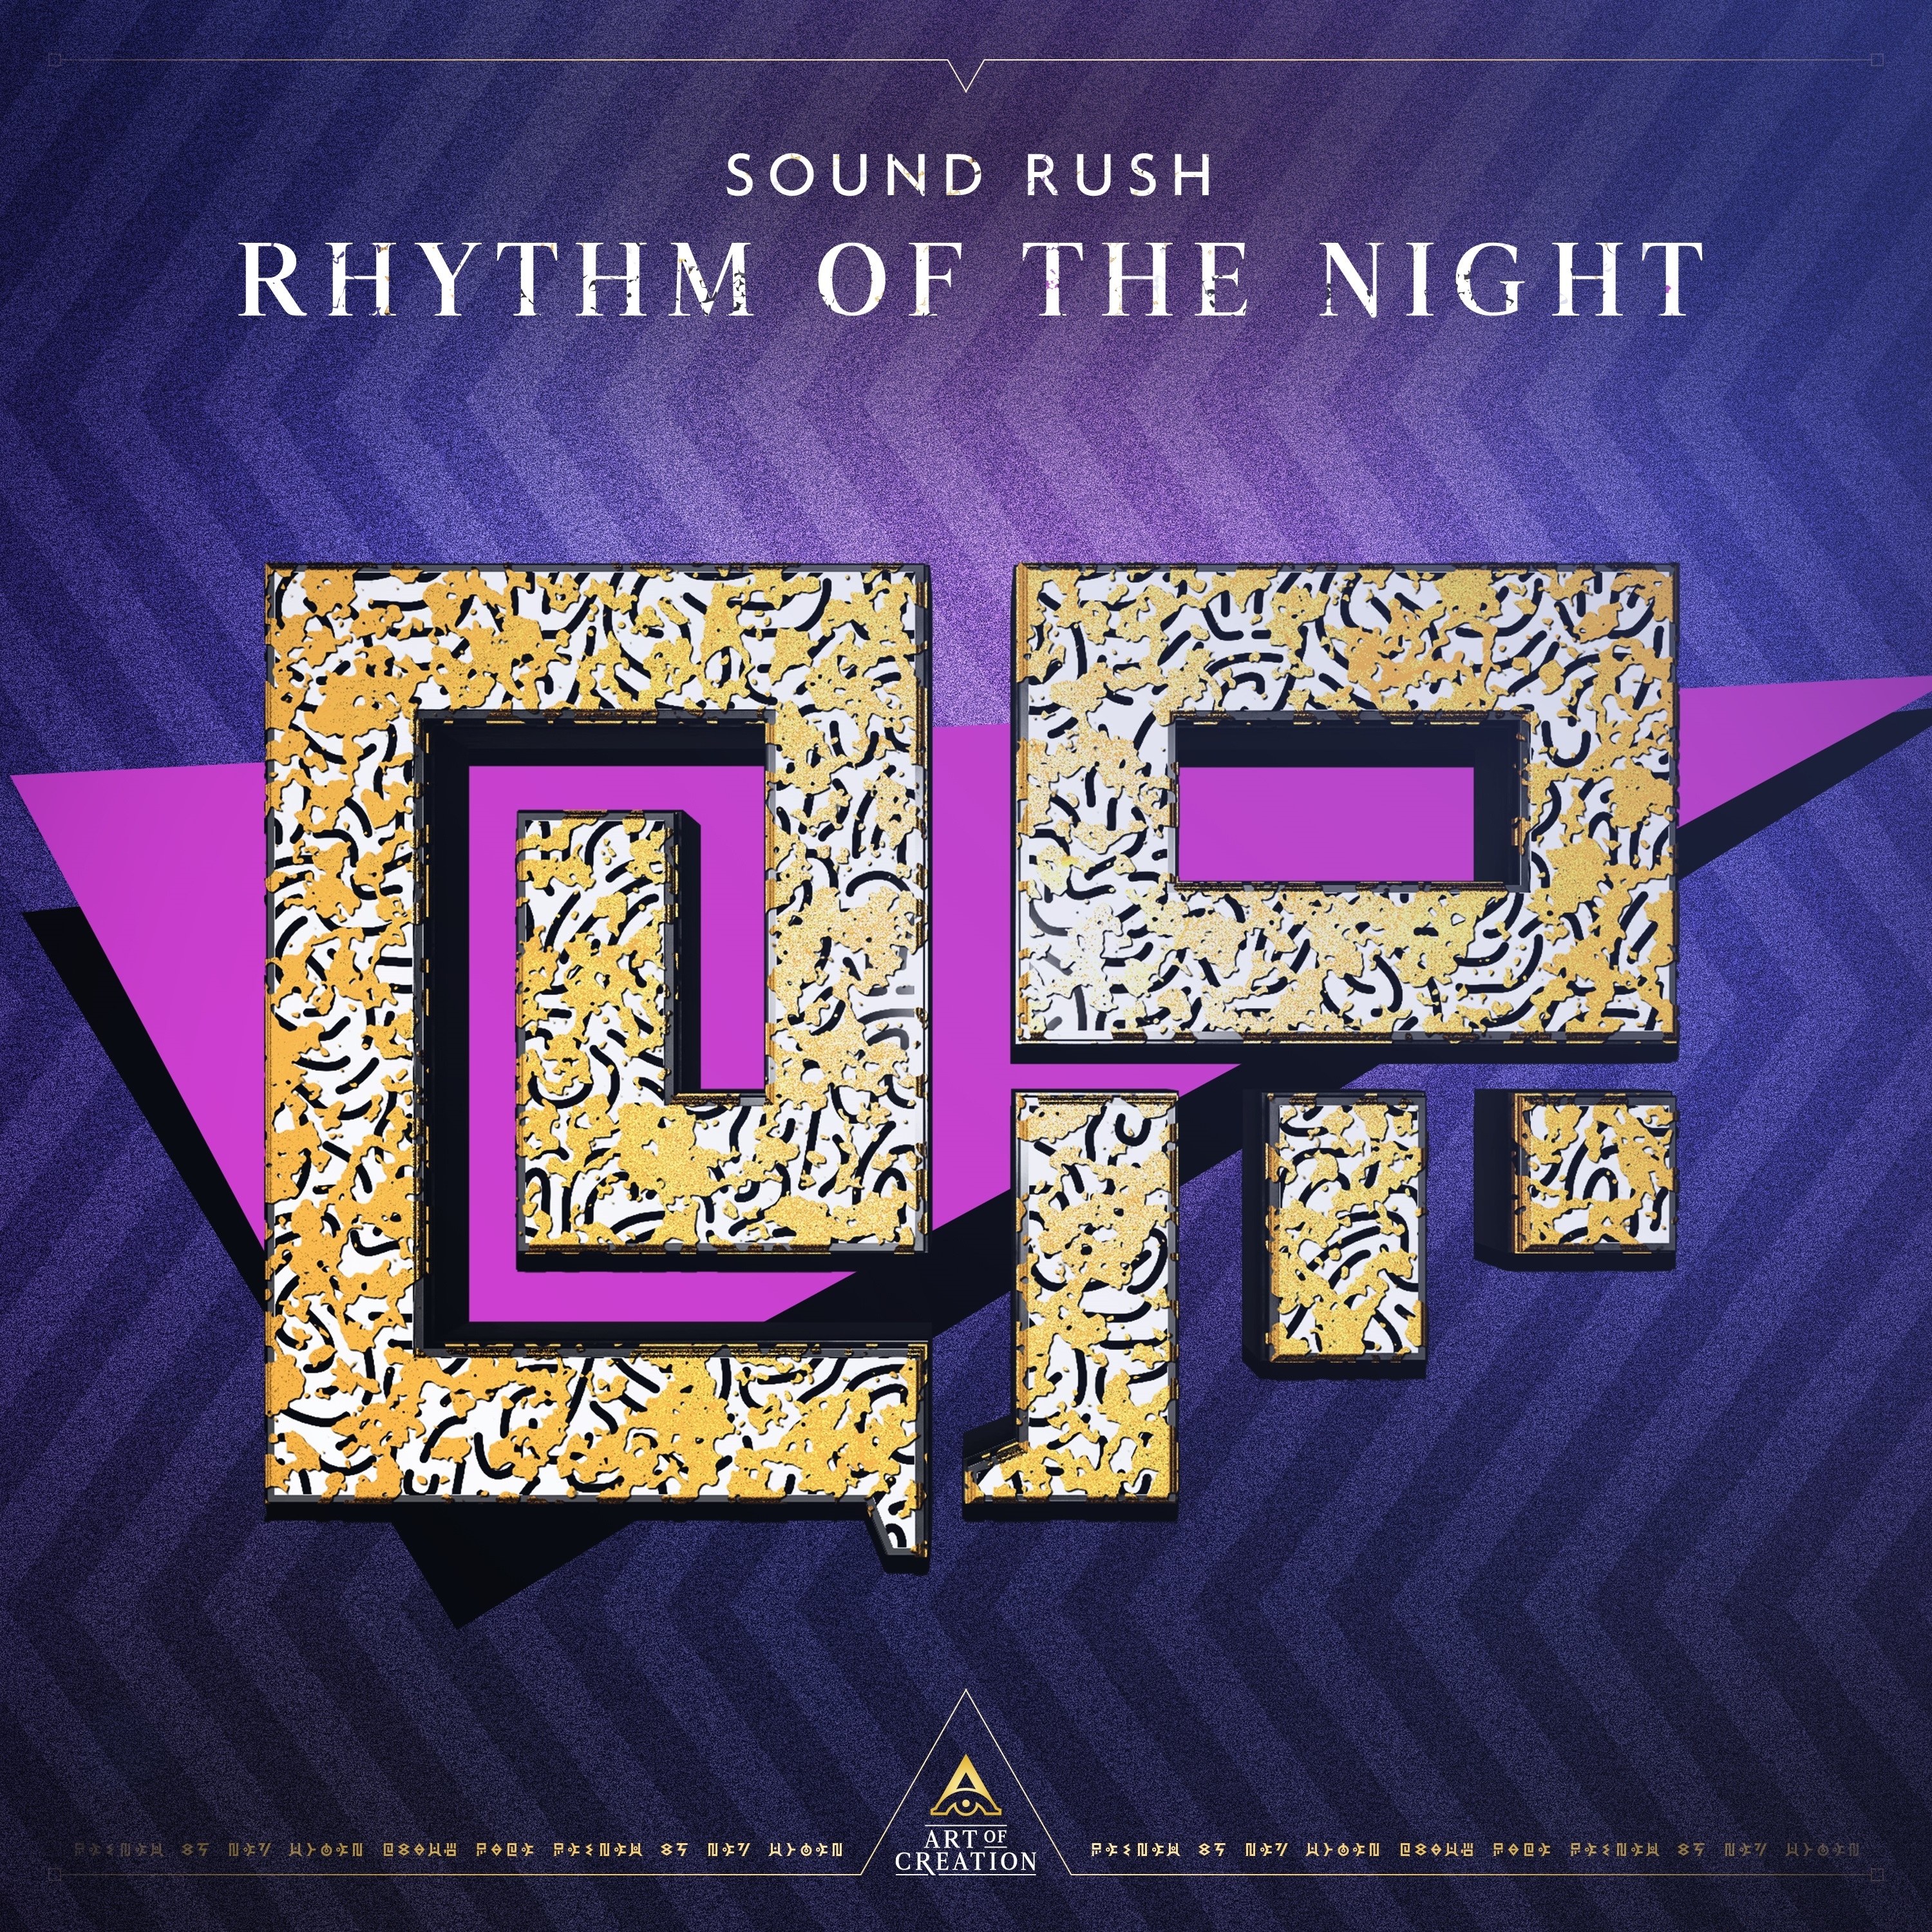 Night of rhythm japanese version. Rhythm of the Night. Rhythm Rush. Loona Rhythm of the Night обложка. Раш звук.